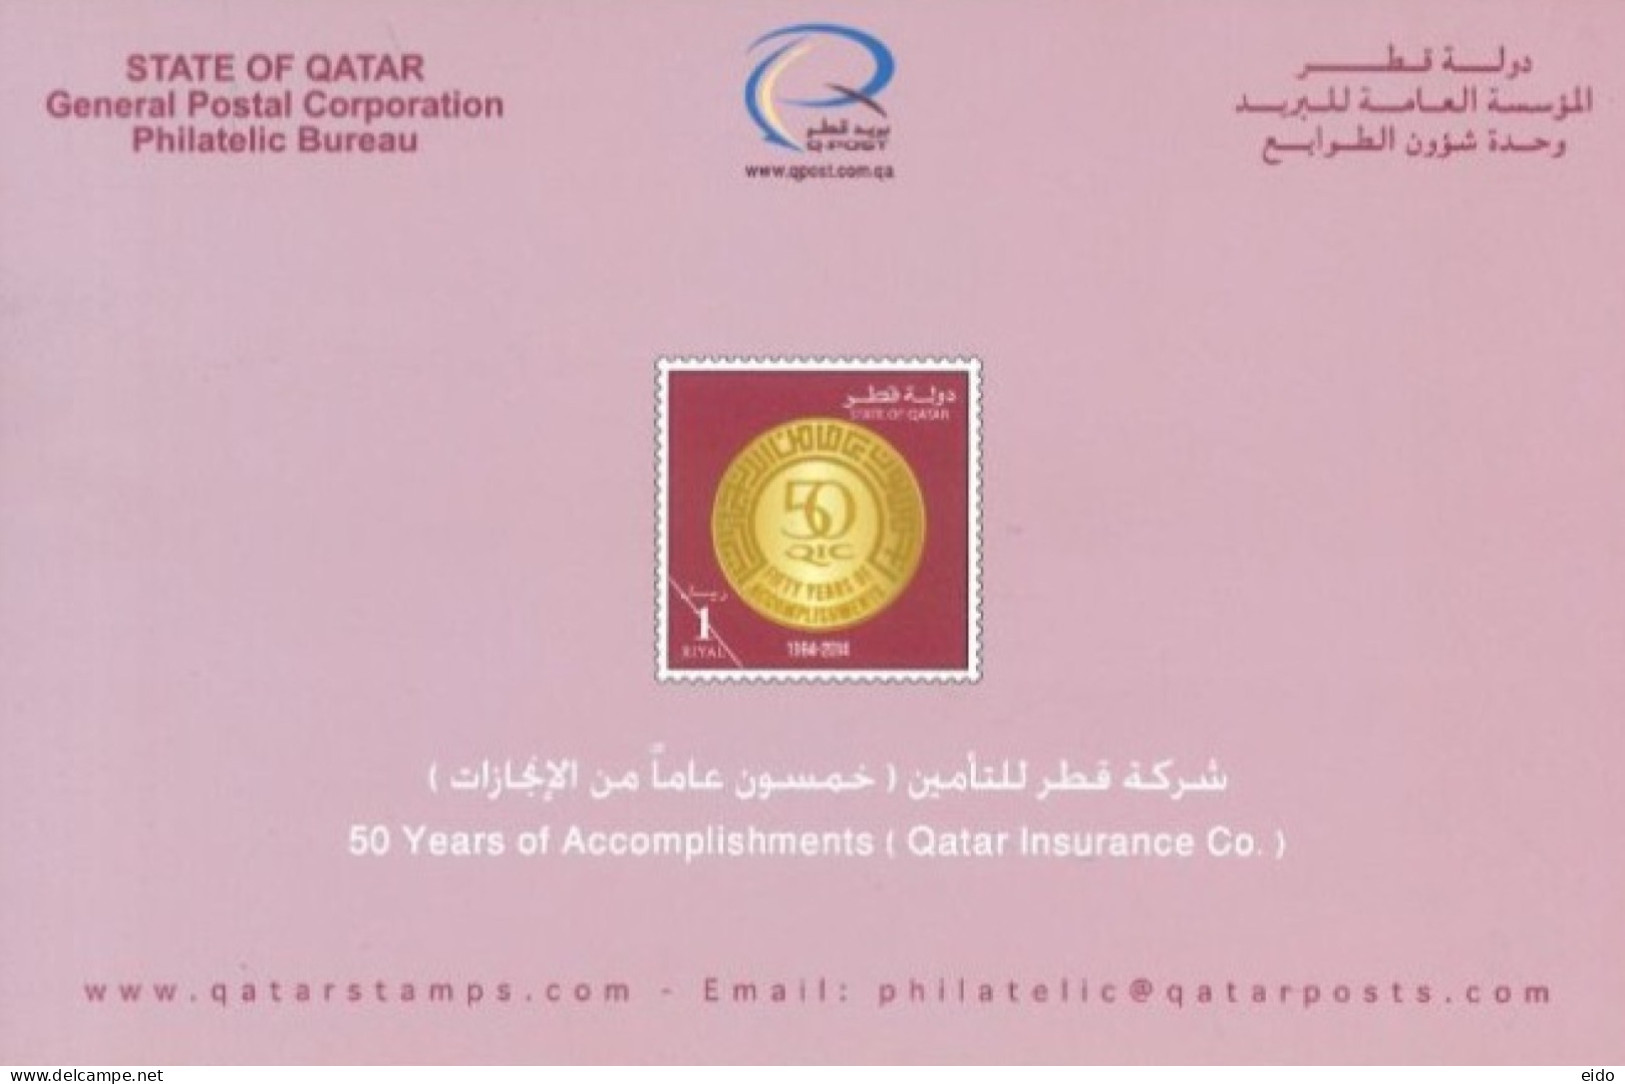 QATAR  - 2014, POSTAL STAMP BULETIN OF 50 YEARS OF ACCOMPLISHMENTS ( QATAR INSURANCE CO.) AND TECHNICAL DETAILS. - Qatar